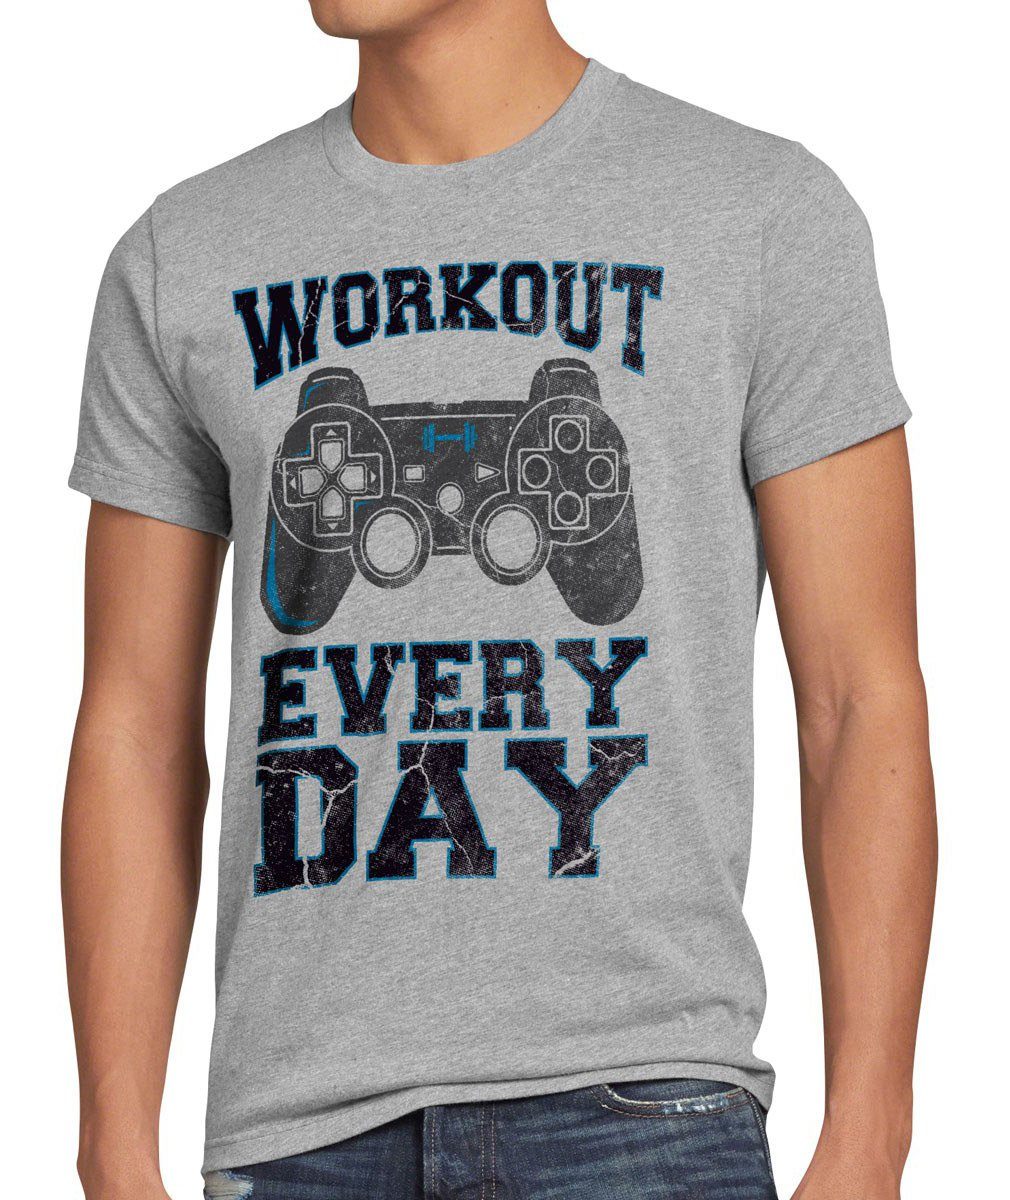 style3 Print-Shirt Herren T-Shirt Workout Gamer play sport station kontroller konsole gym game fun grau meliert